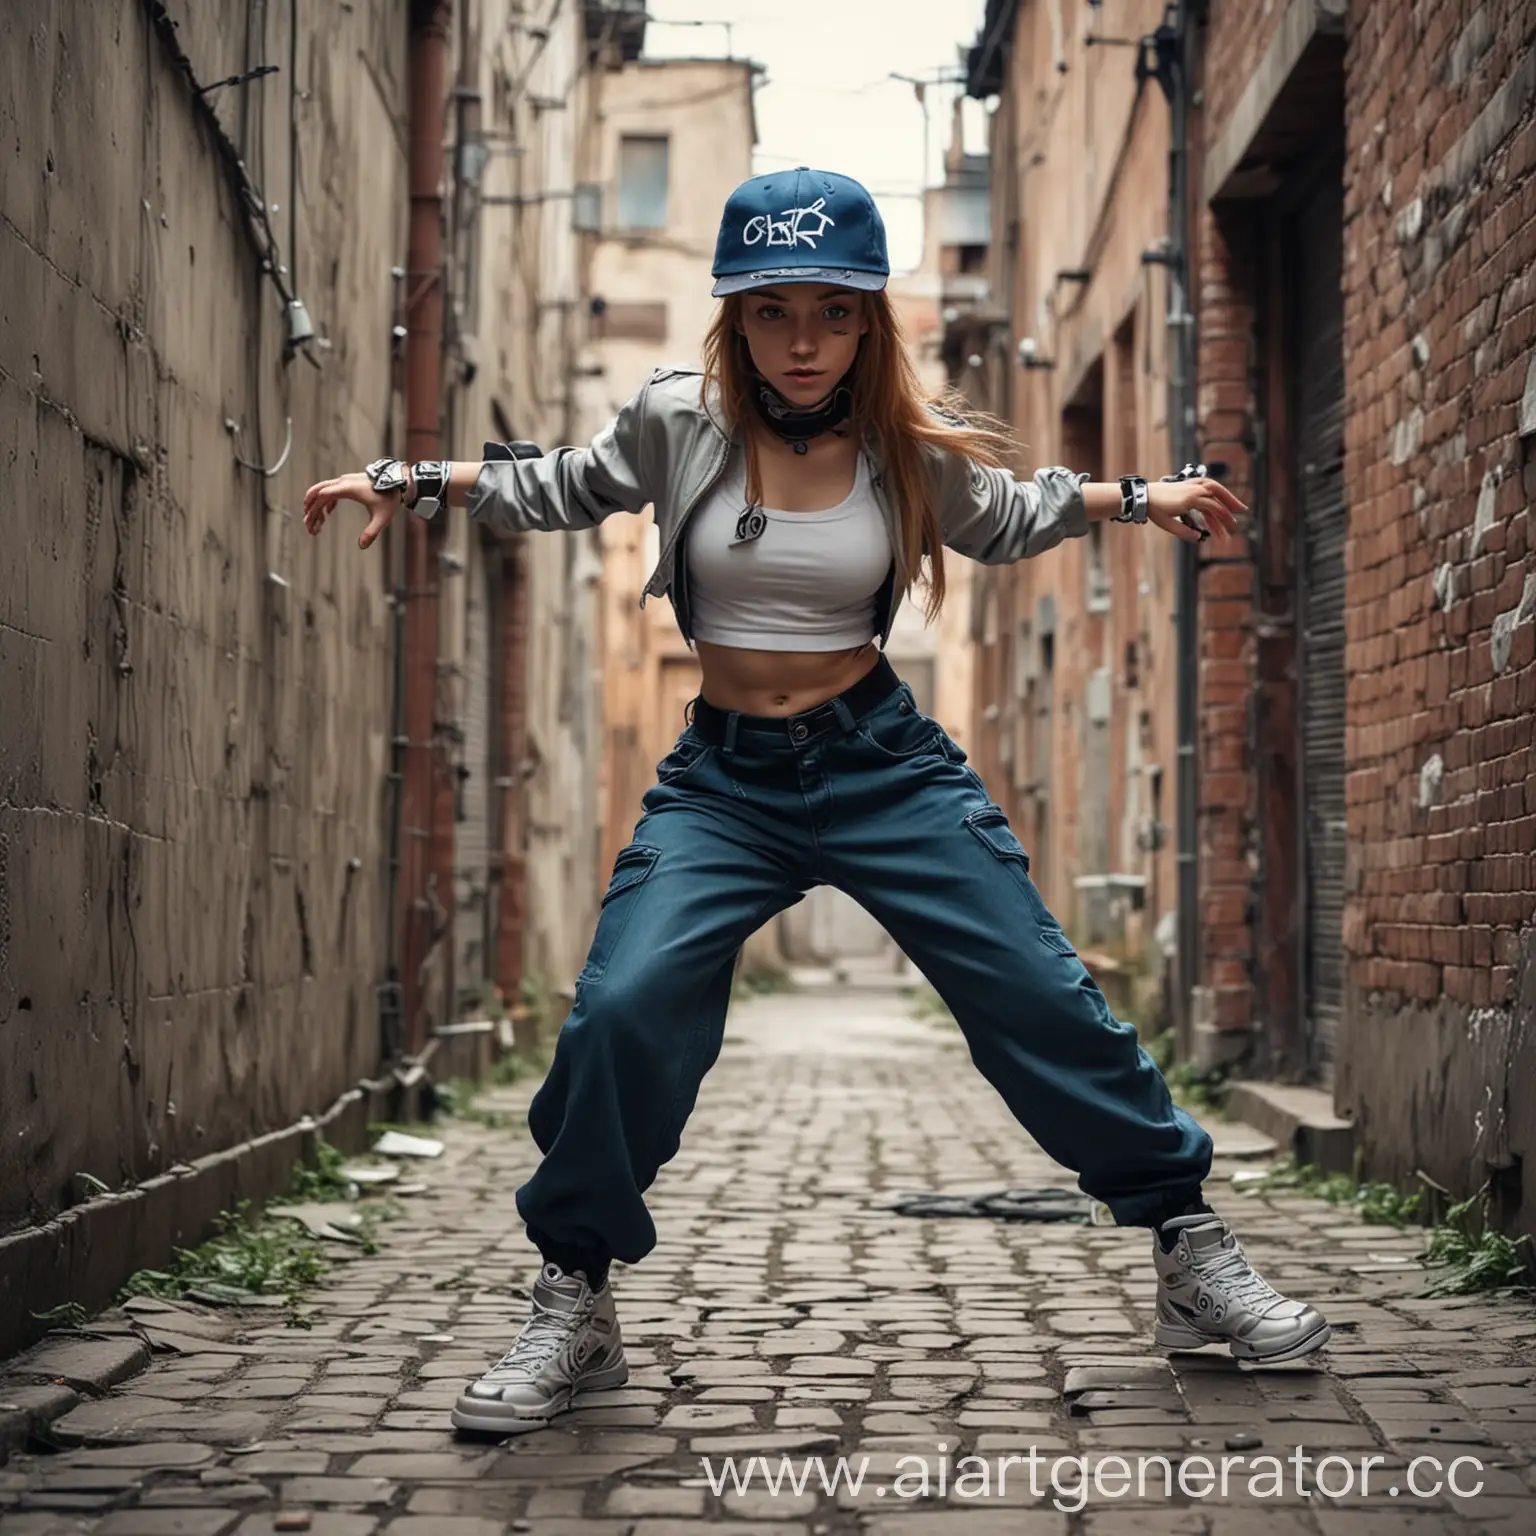 Breakdancing-Cyborg-Girl-in-Cap-Dominates-Urban-Alley